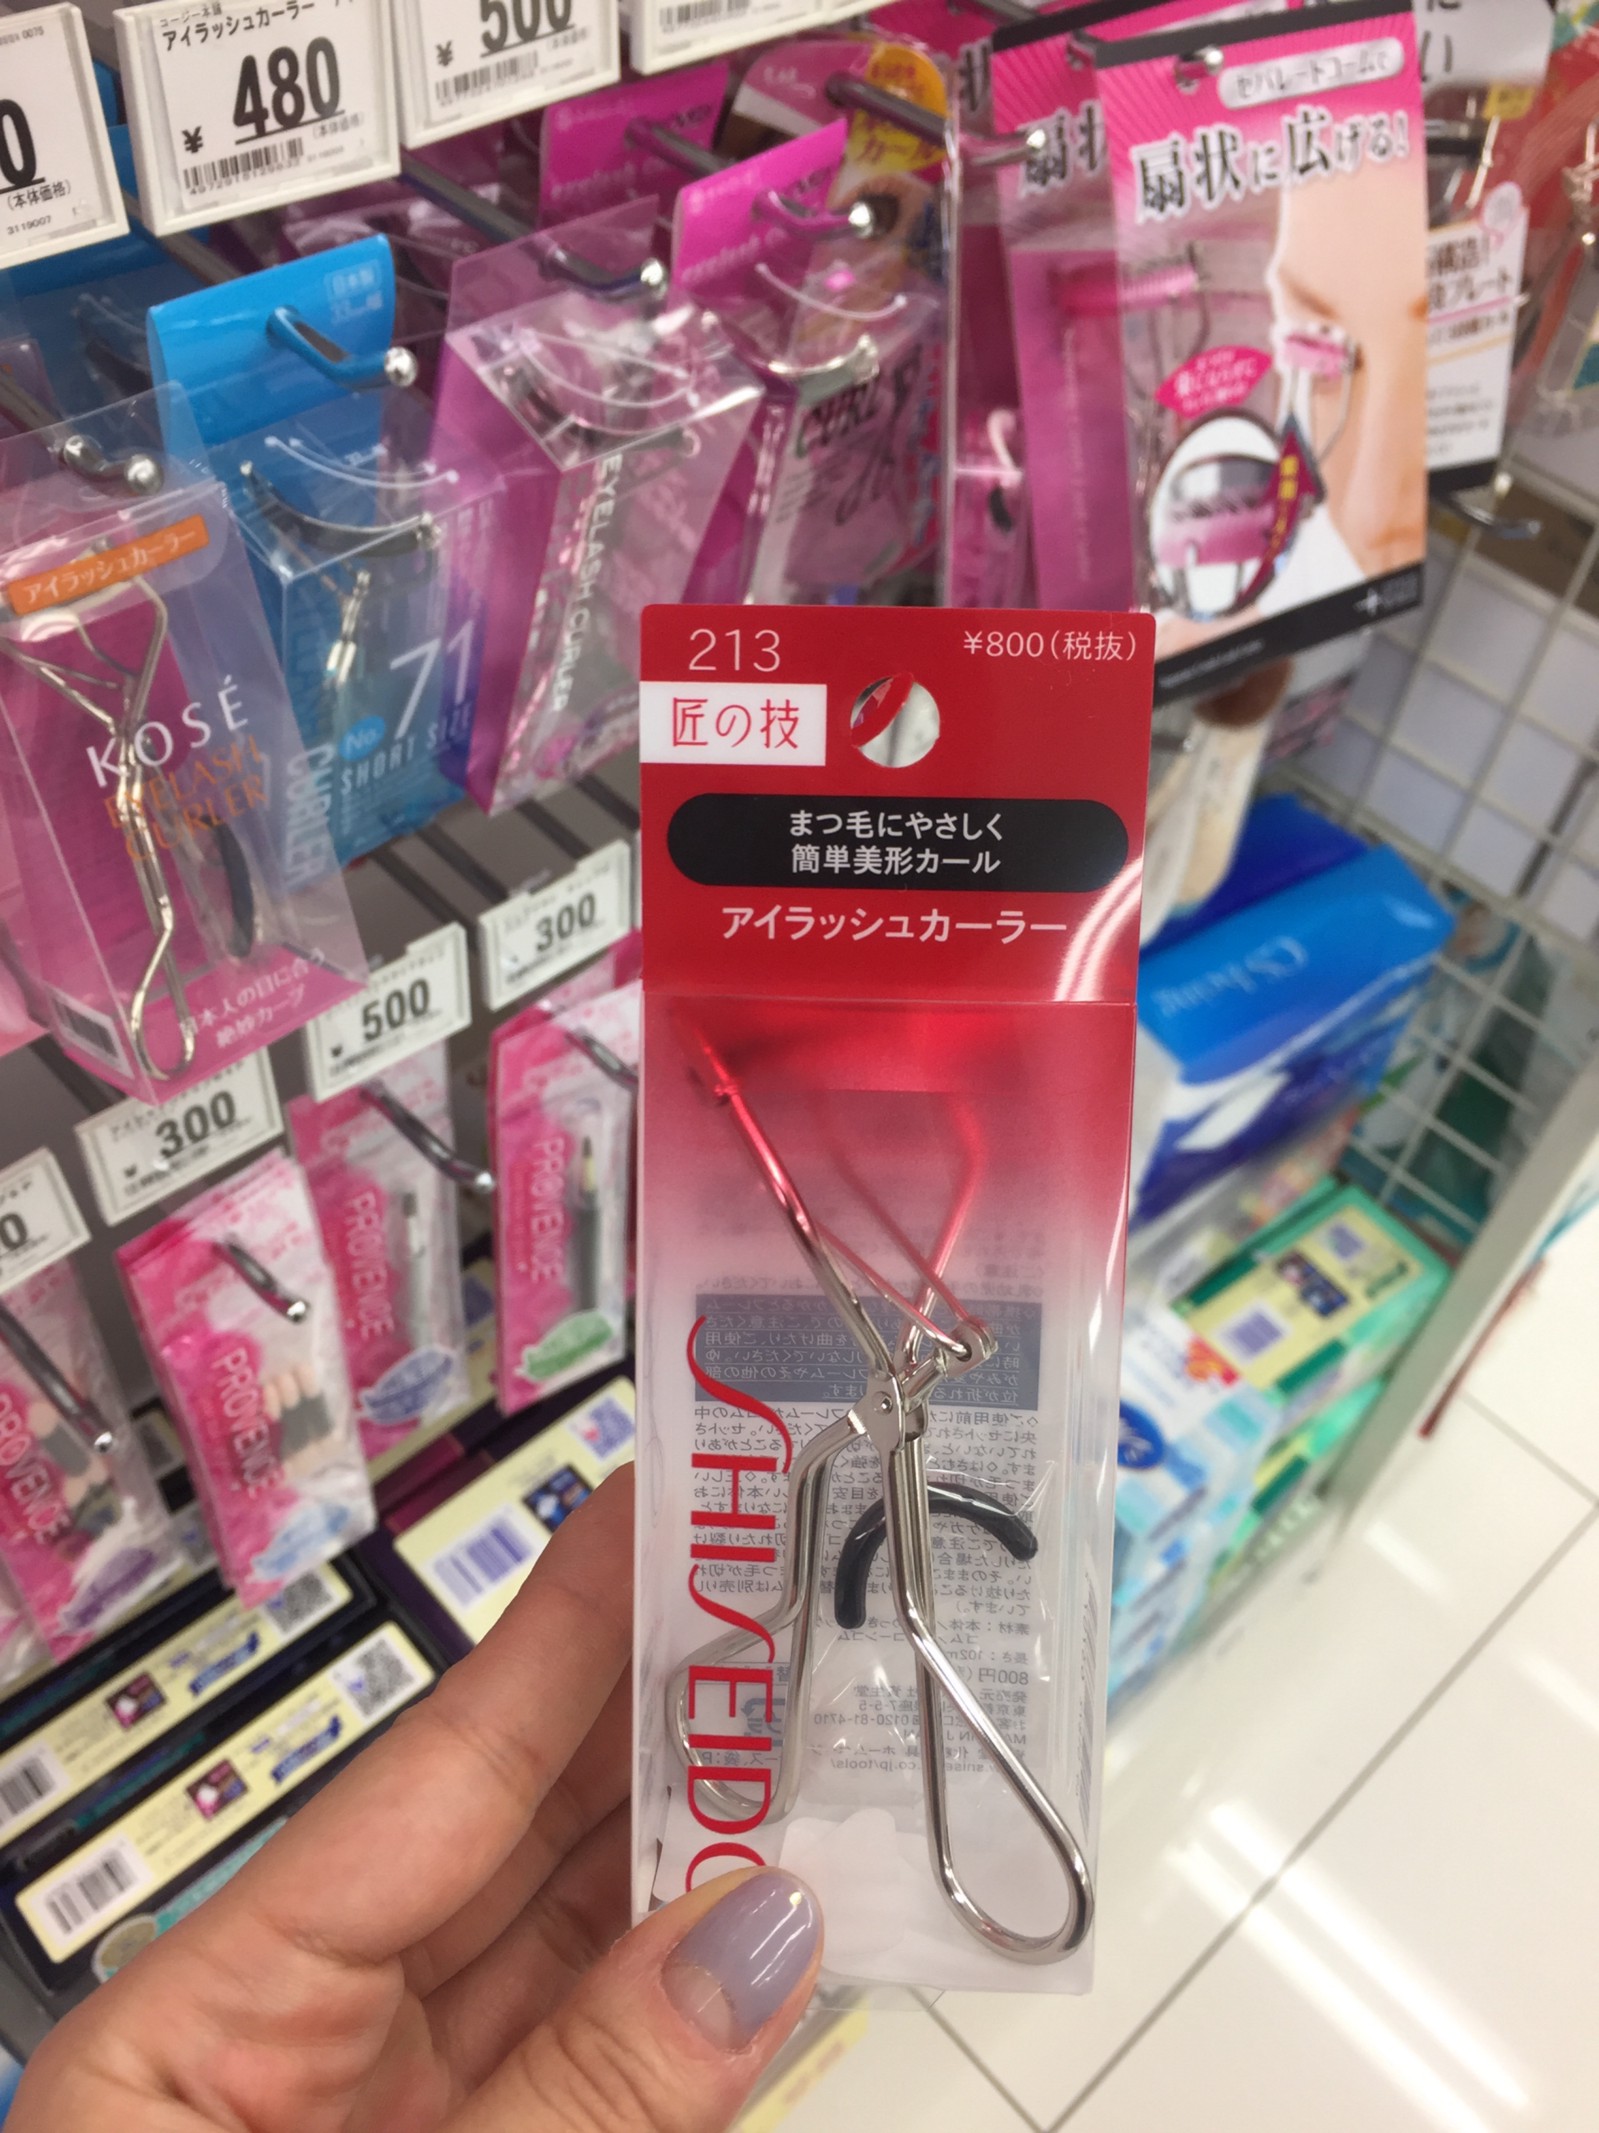 The best selling beauty item: Eyelash curler by Shiseido 